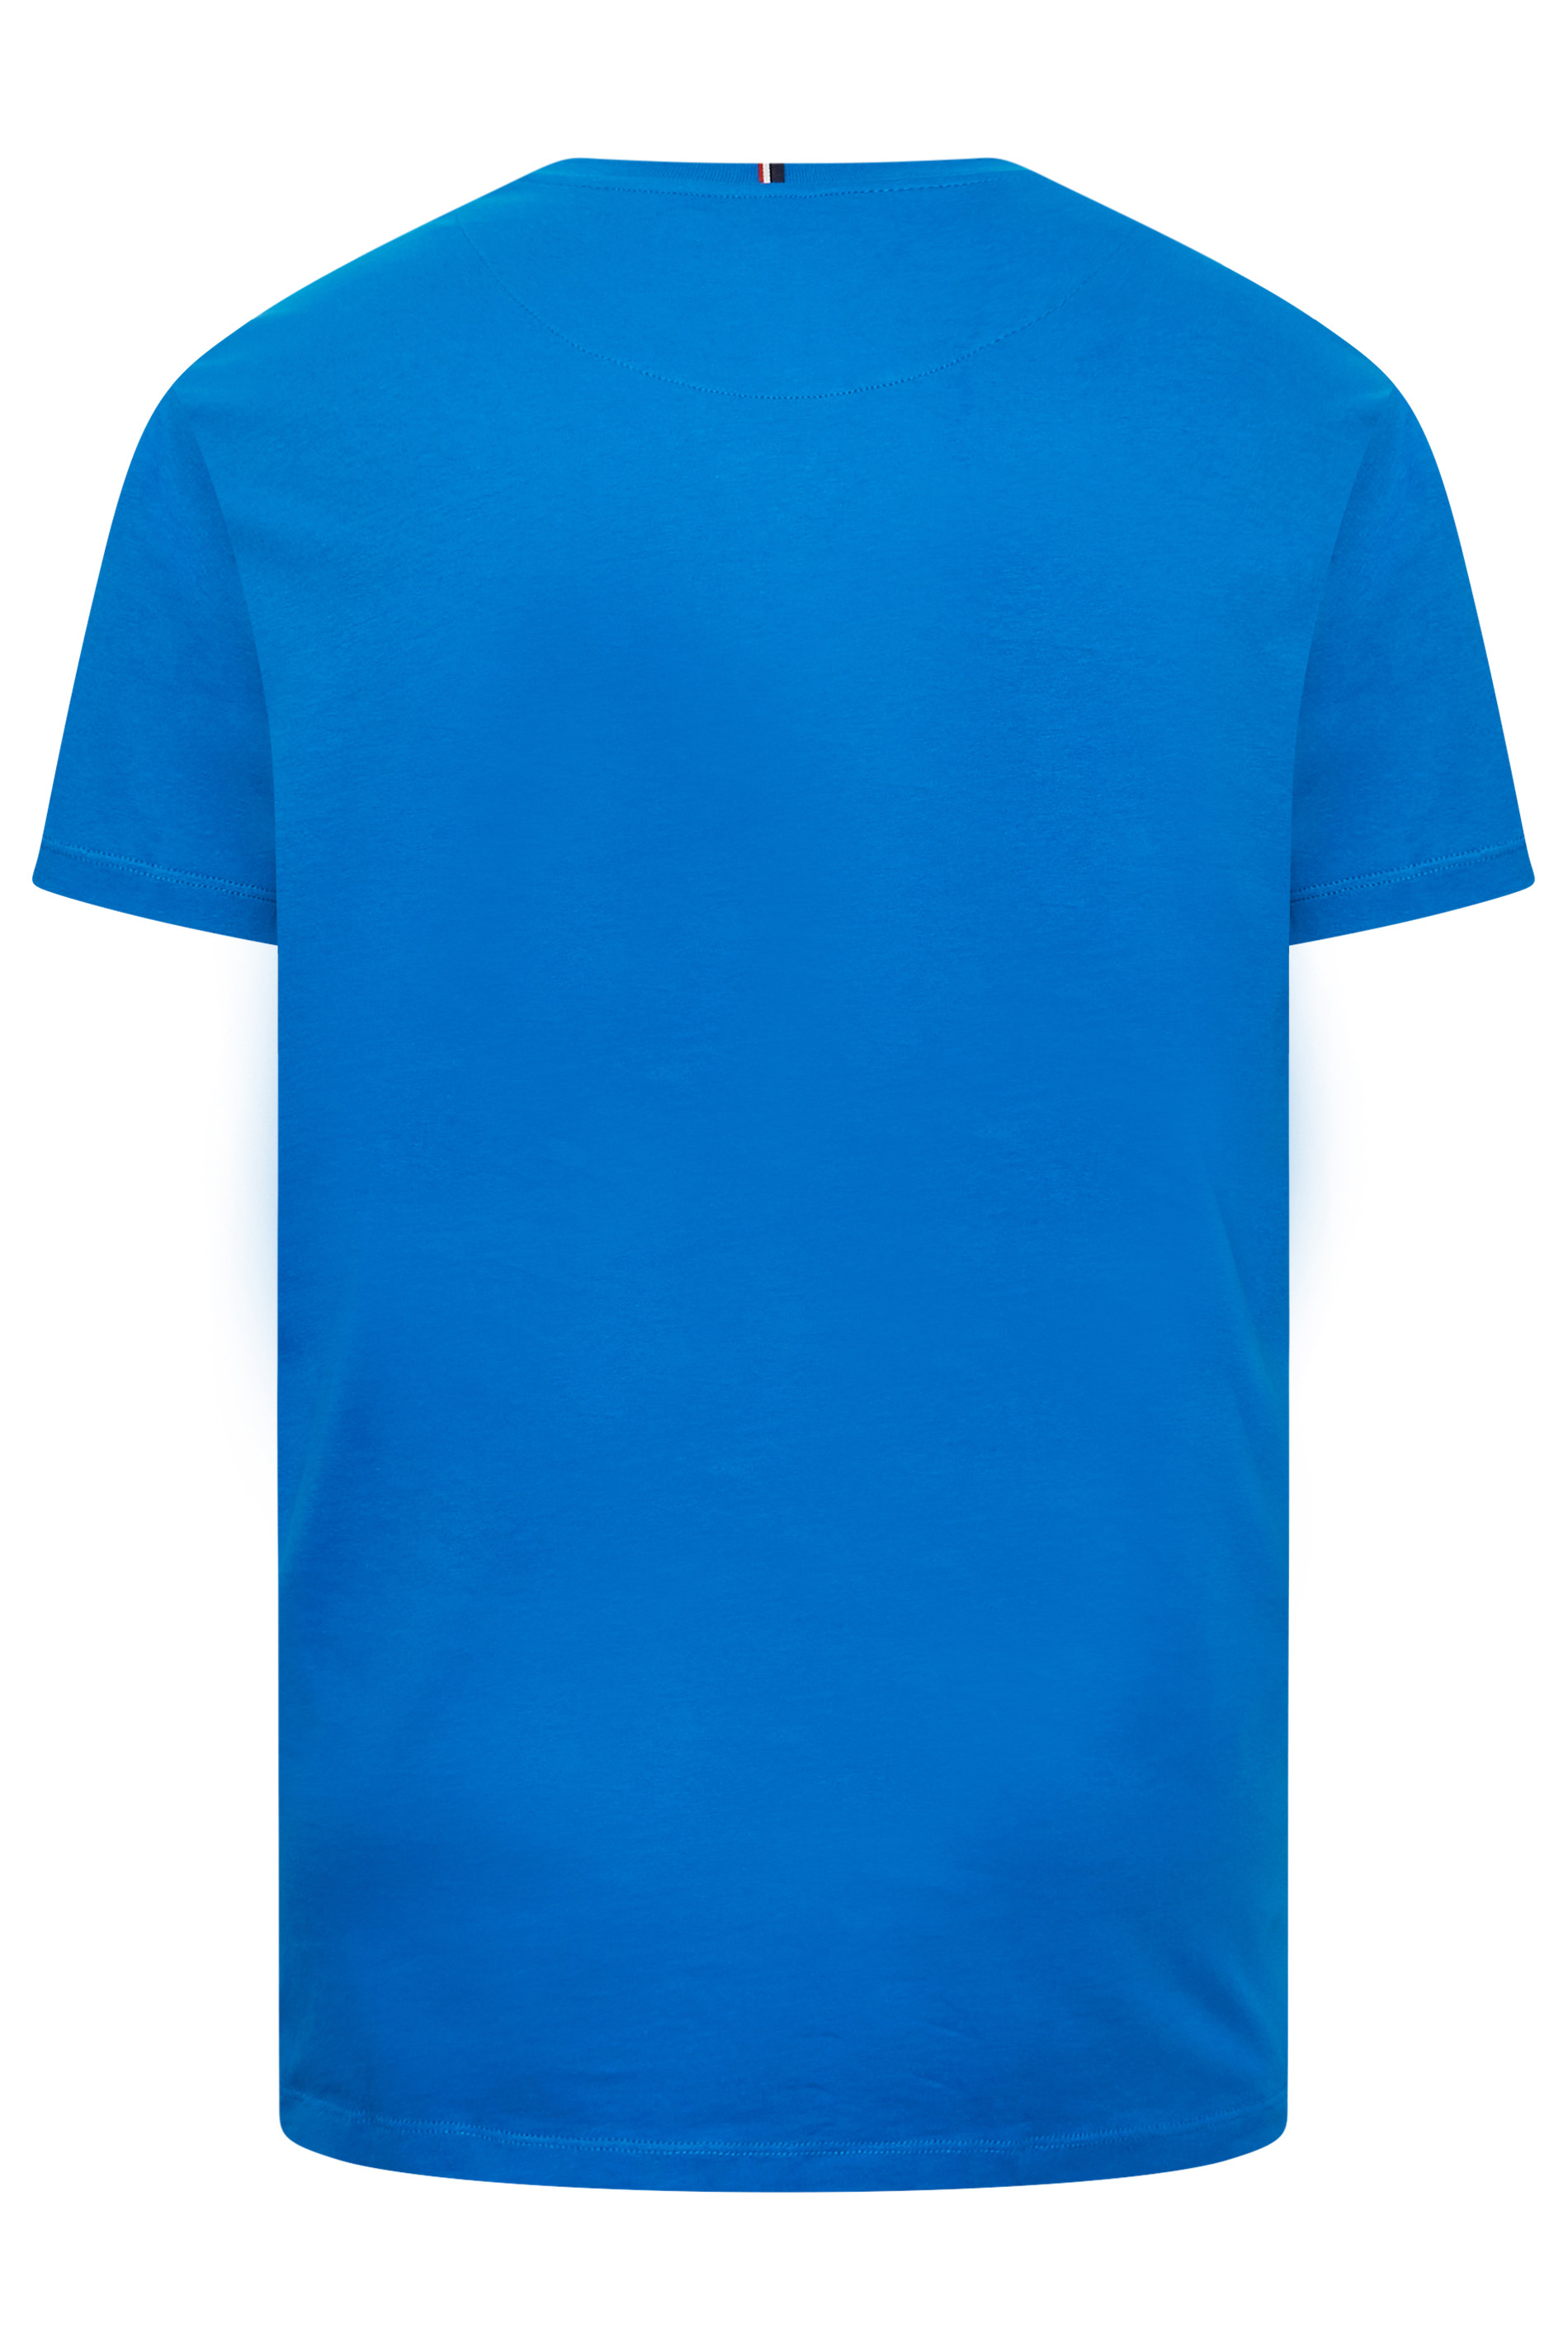 U.S. POLO ASSN. Big & Tall Blue Short Sleeve Core T-Shirt | BadRhino 3